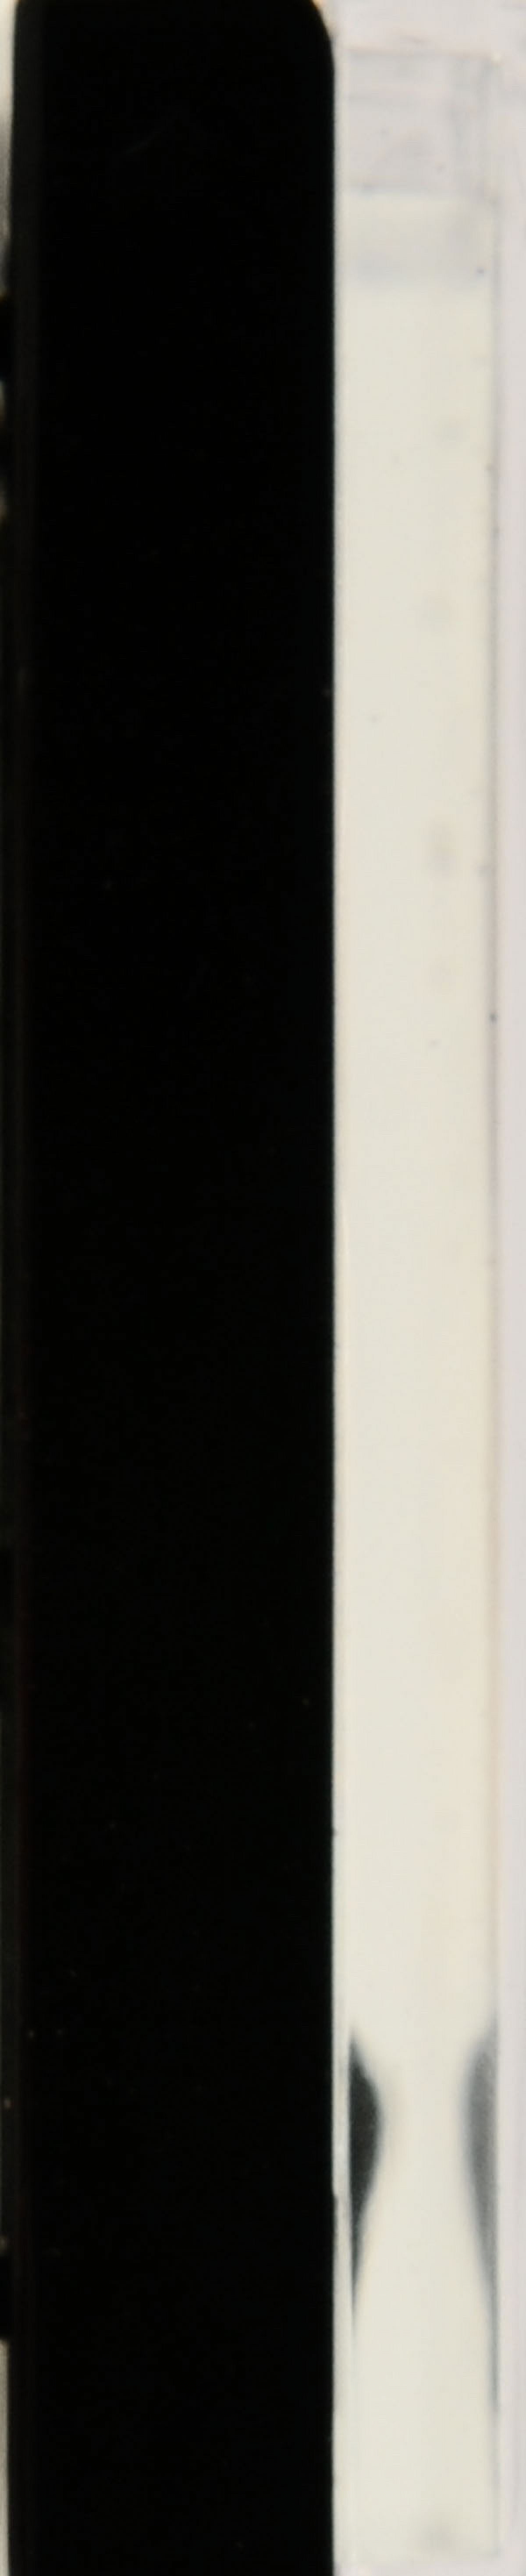 Coty Rimmel Glam'Eyes HD 5-Colour Eye Shadow, 0.13 oz - image 3 of 5